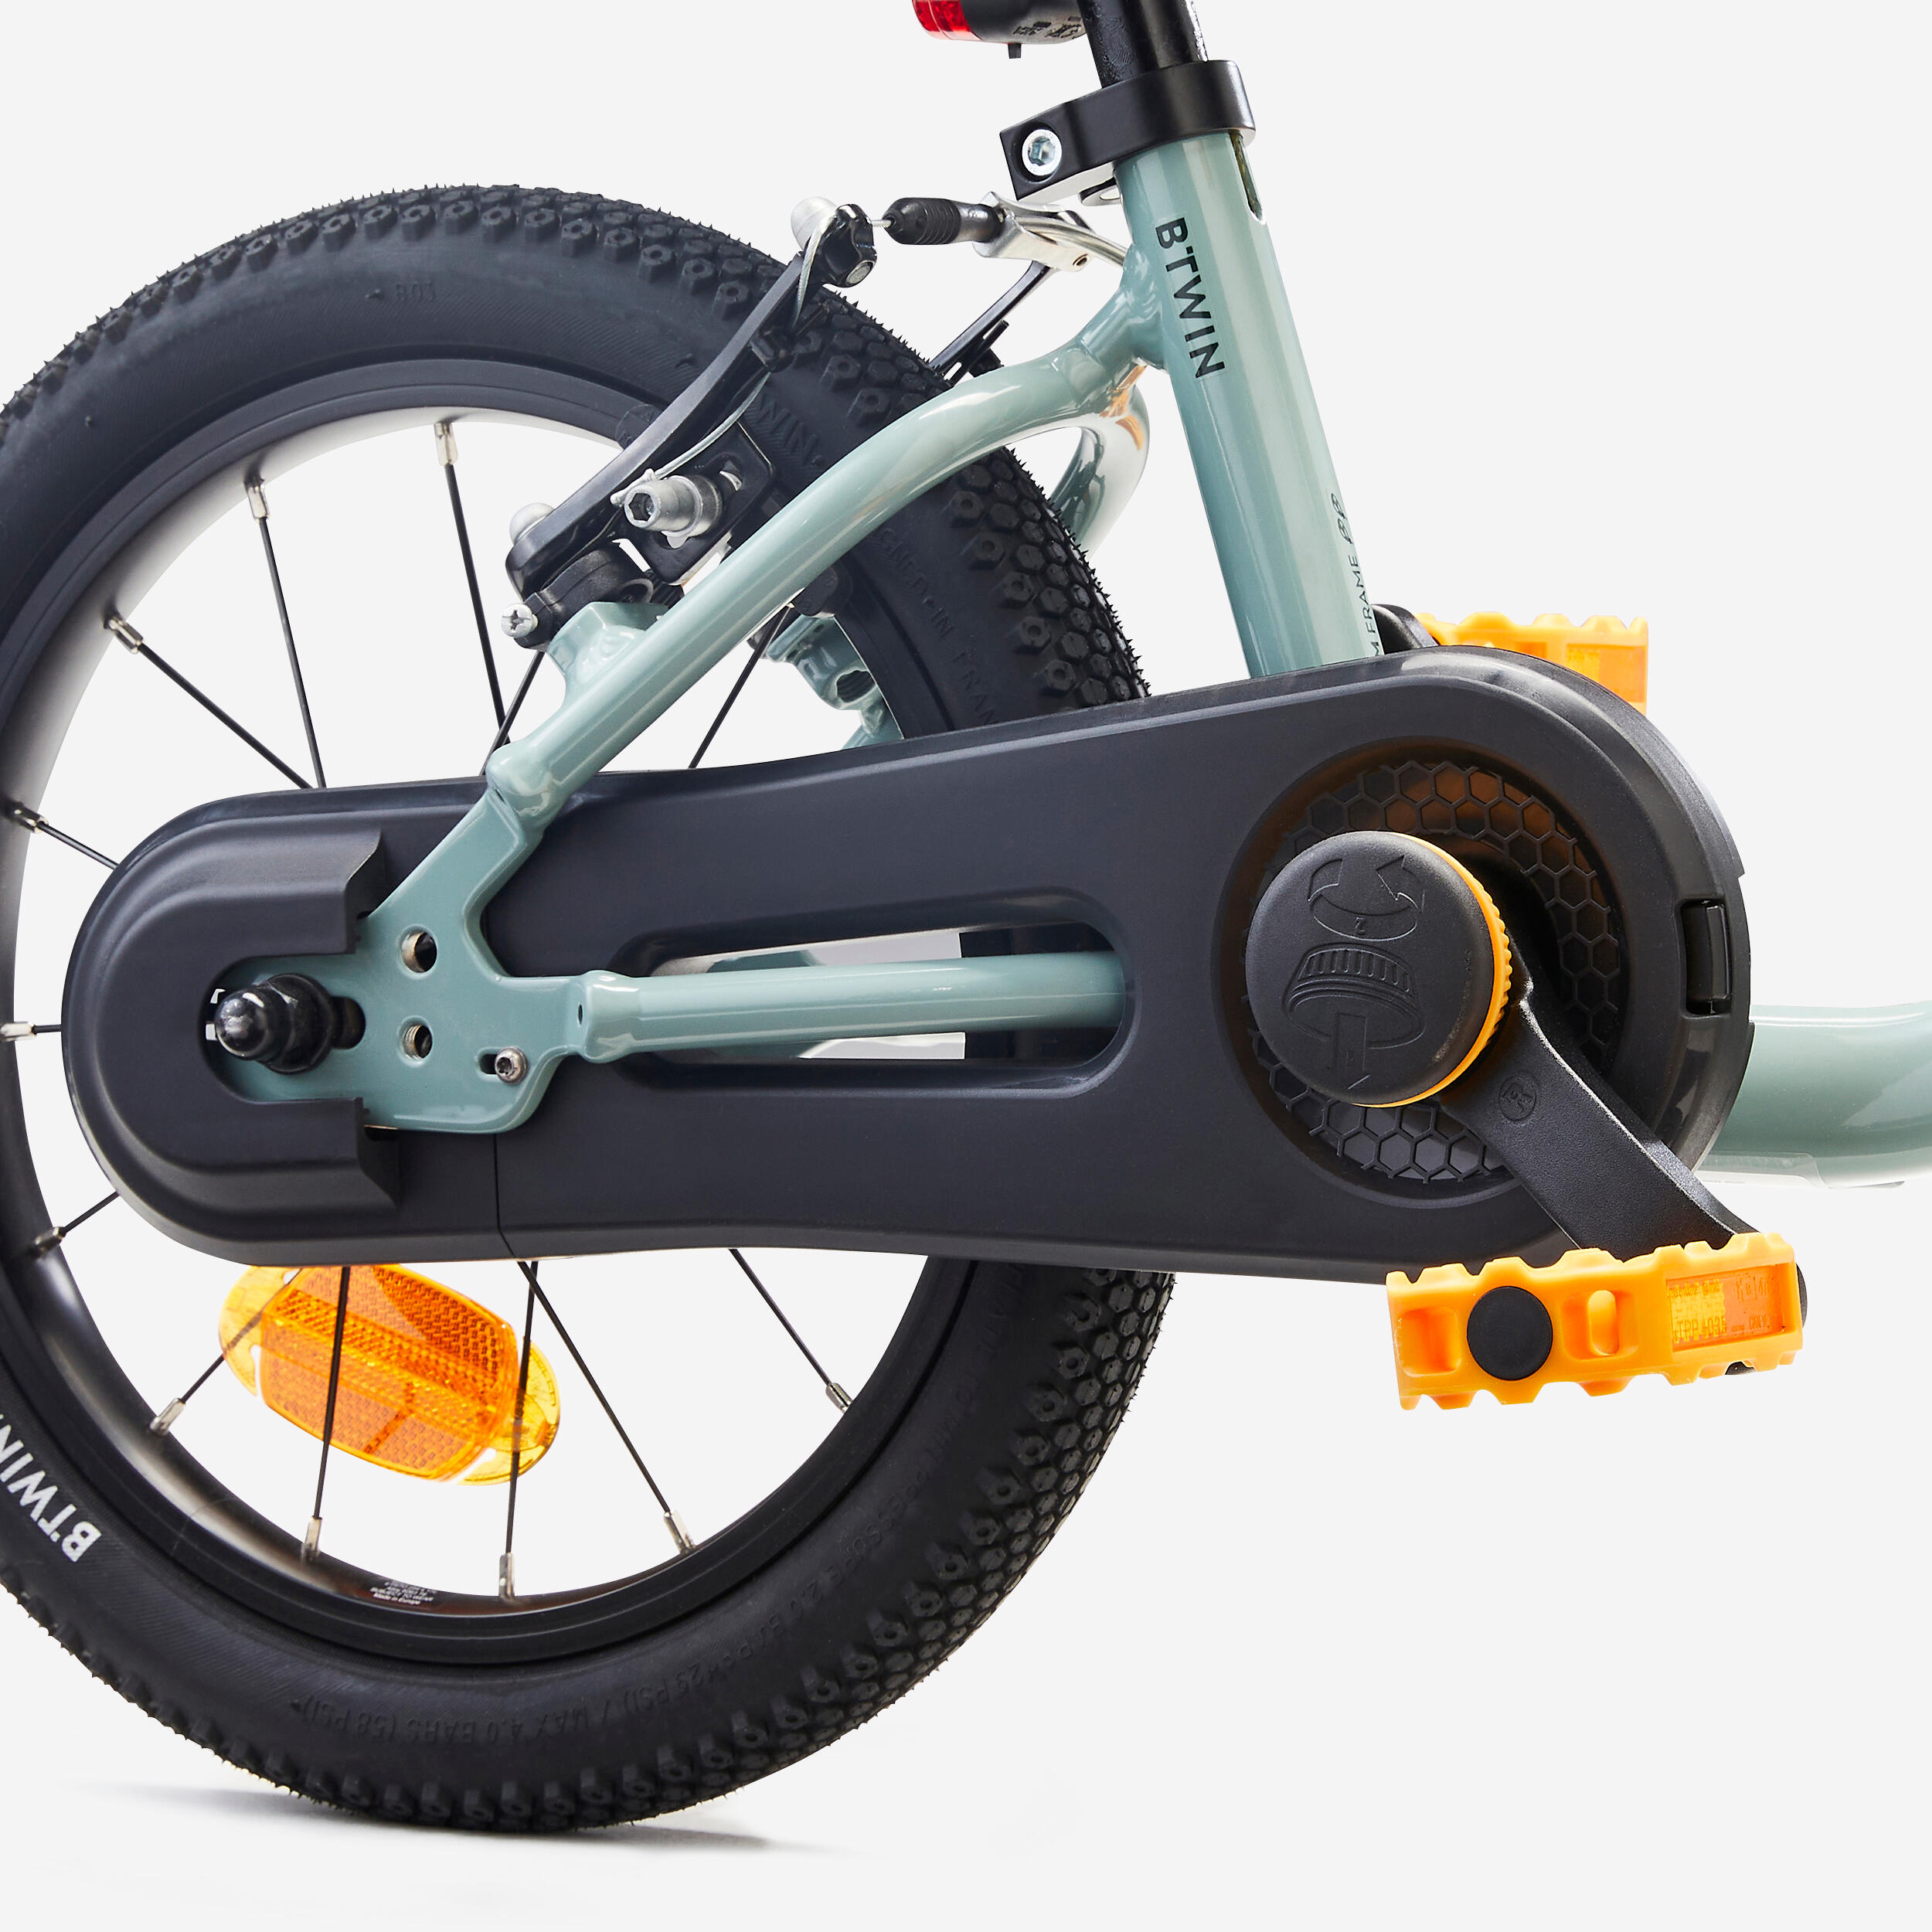 Kids' 3-5 Years 2-in-1 14 Inch Balance Bike Discover 900 - Green 9/12